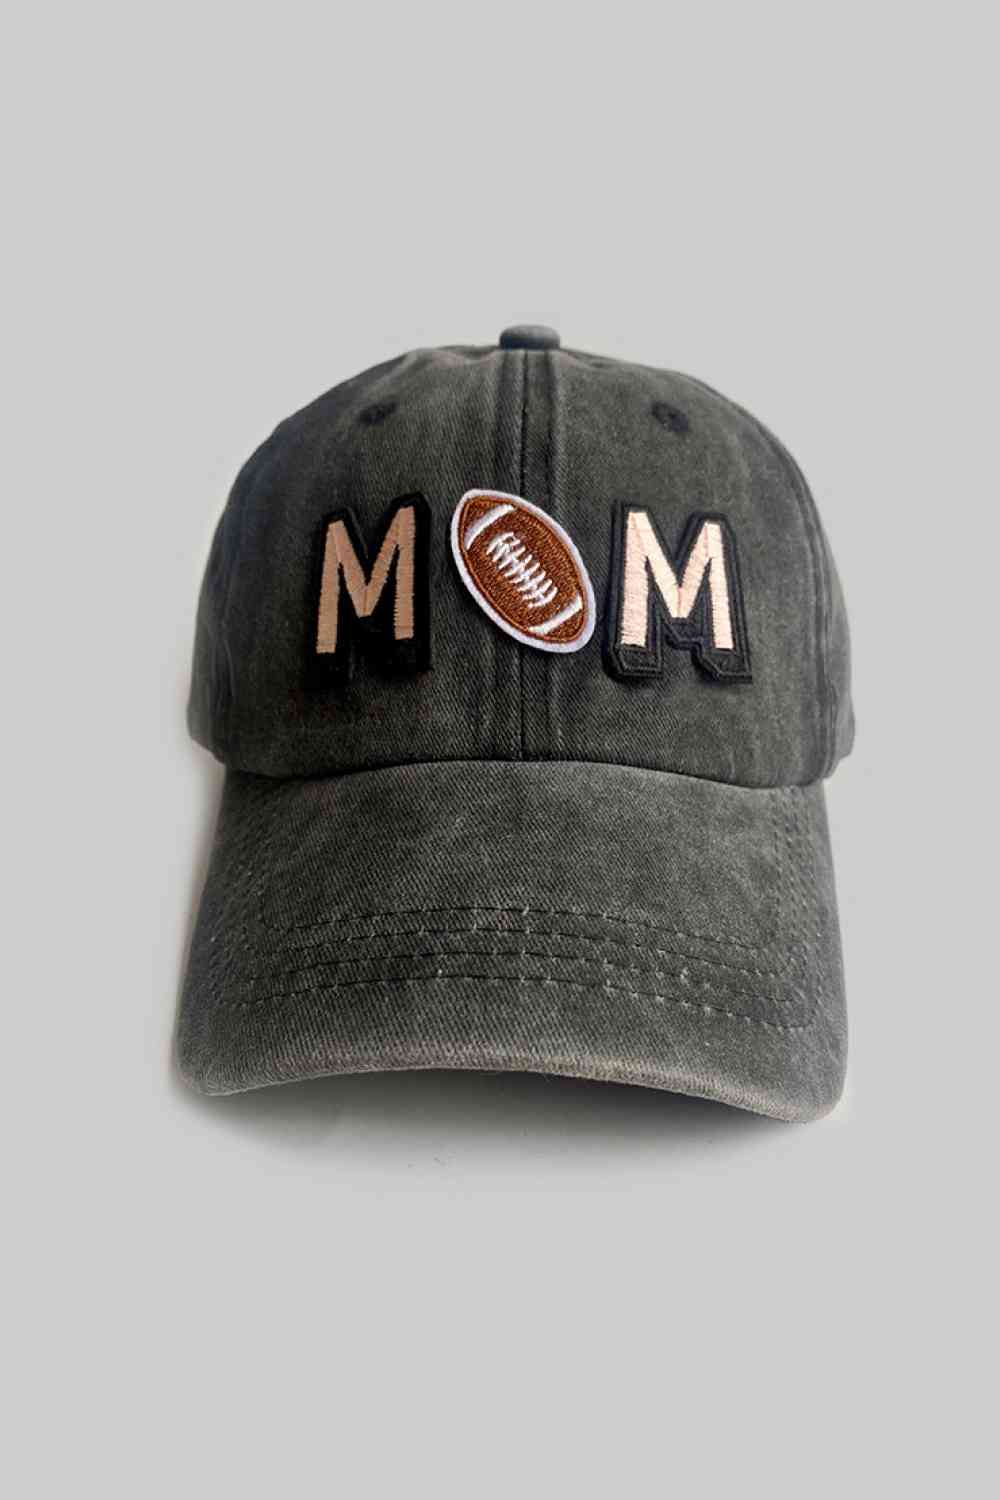 "MOM" Football Cap